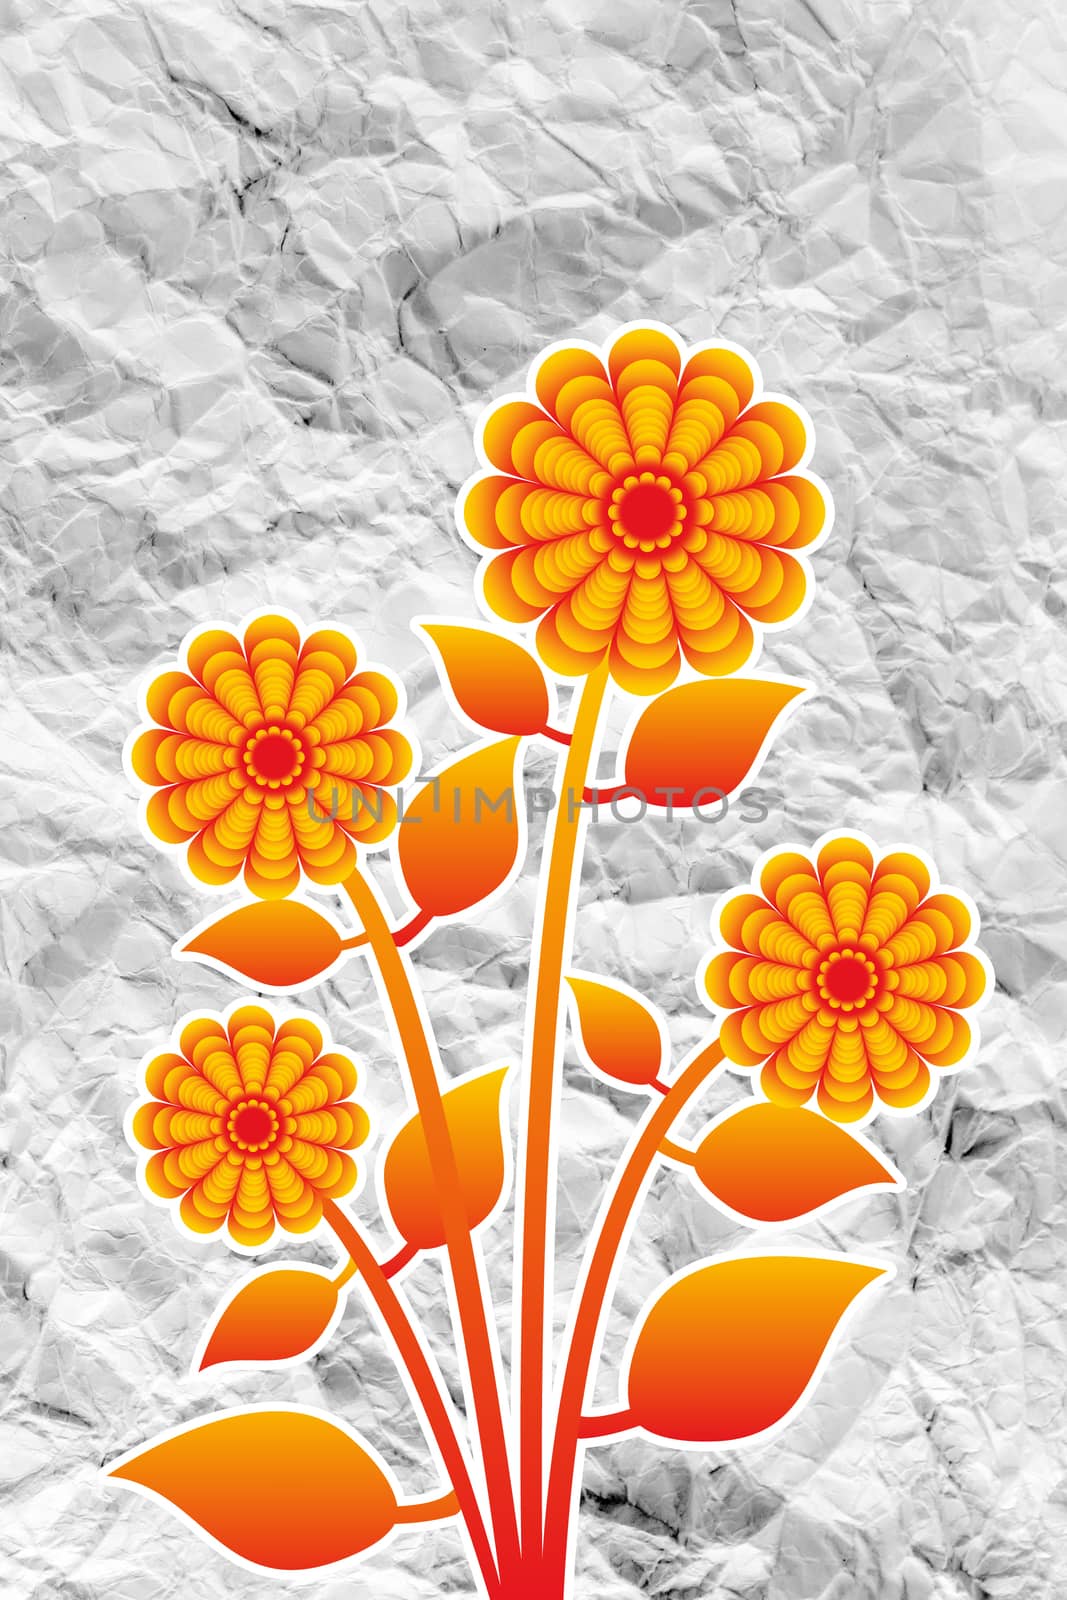 Flowers design on crumpled paper by kiddaikiddee